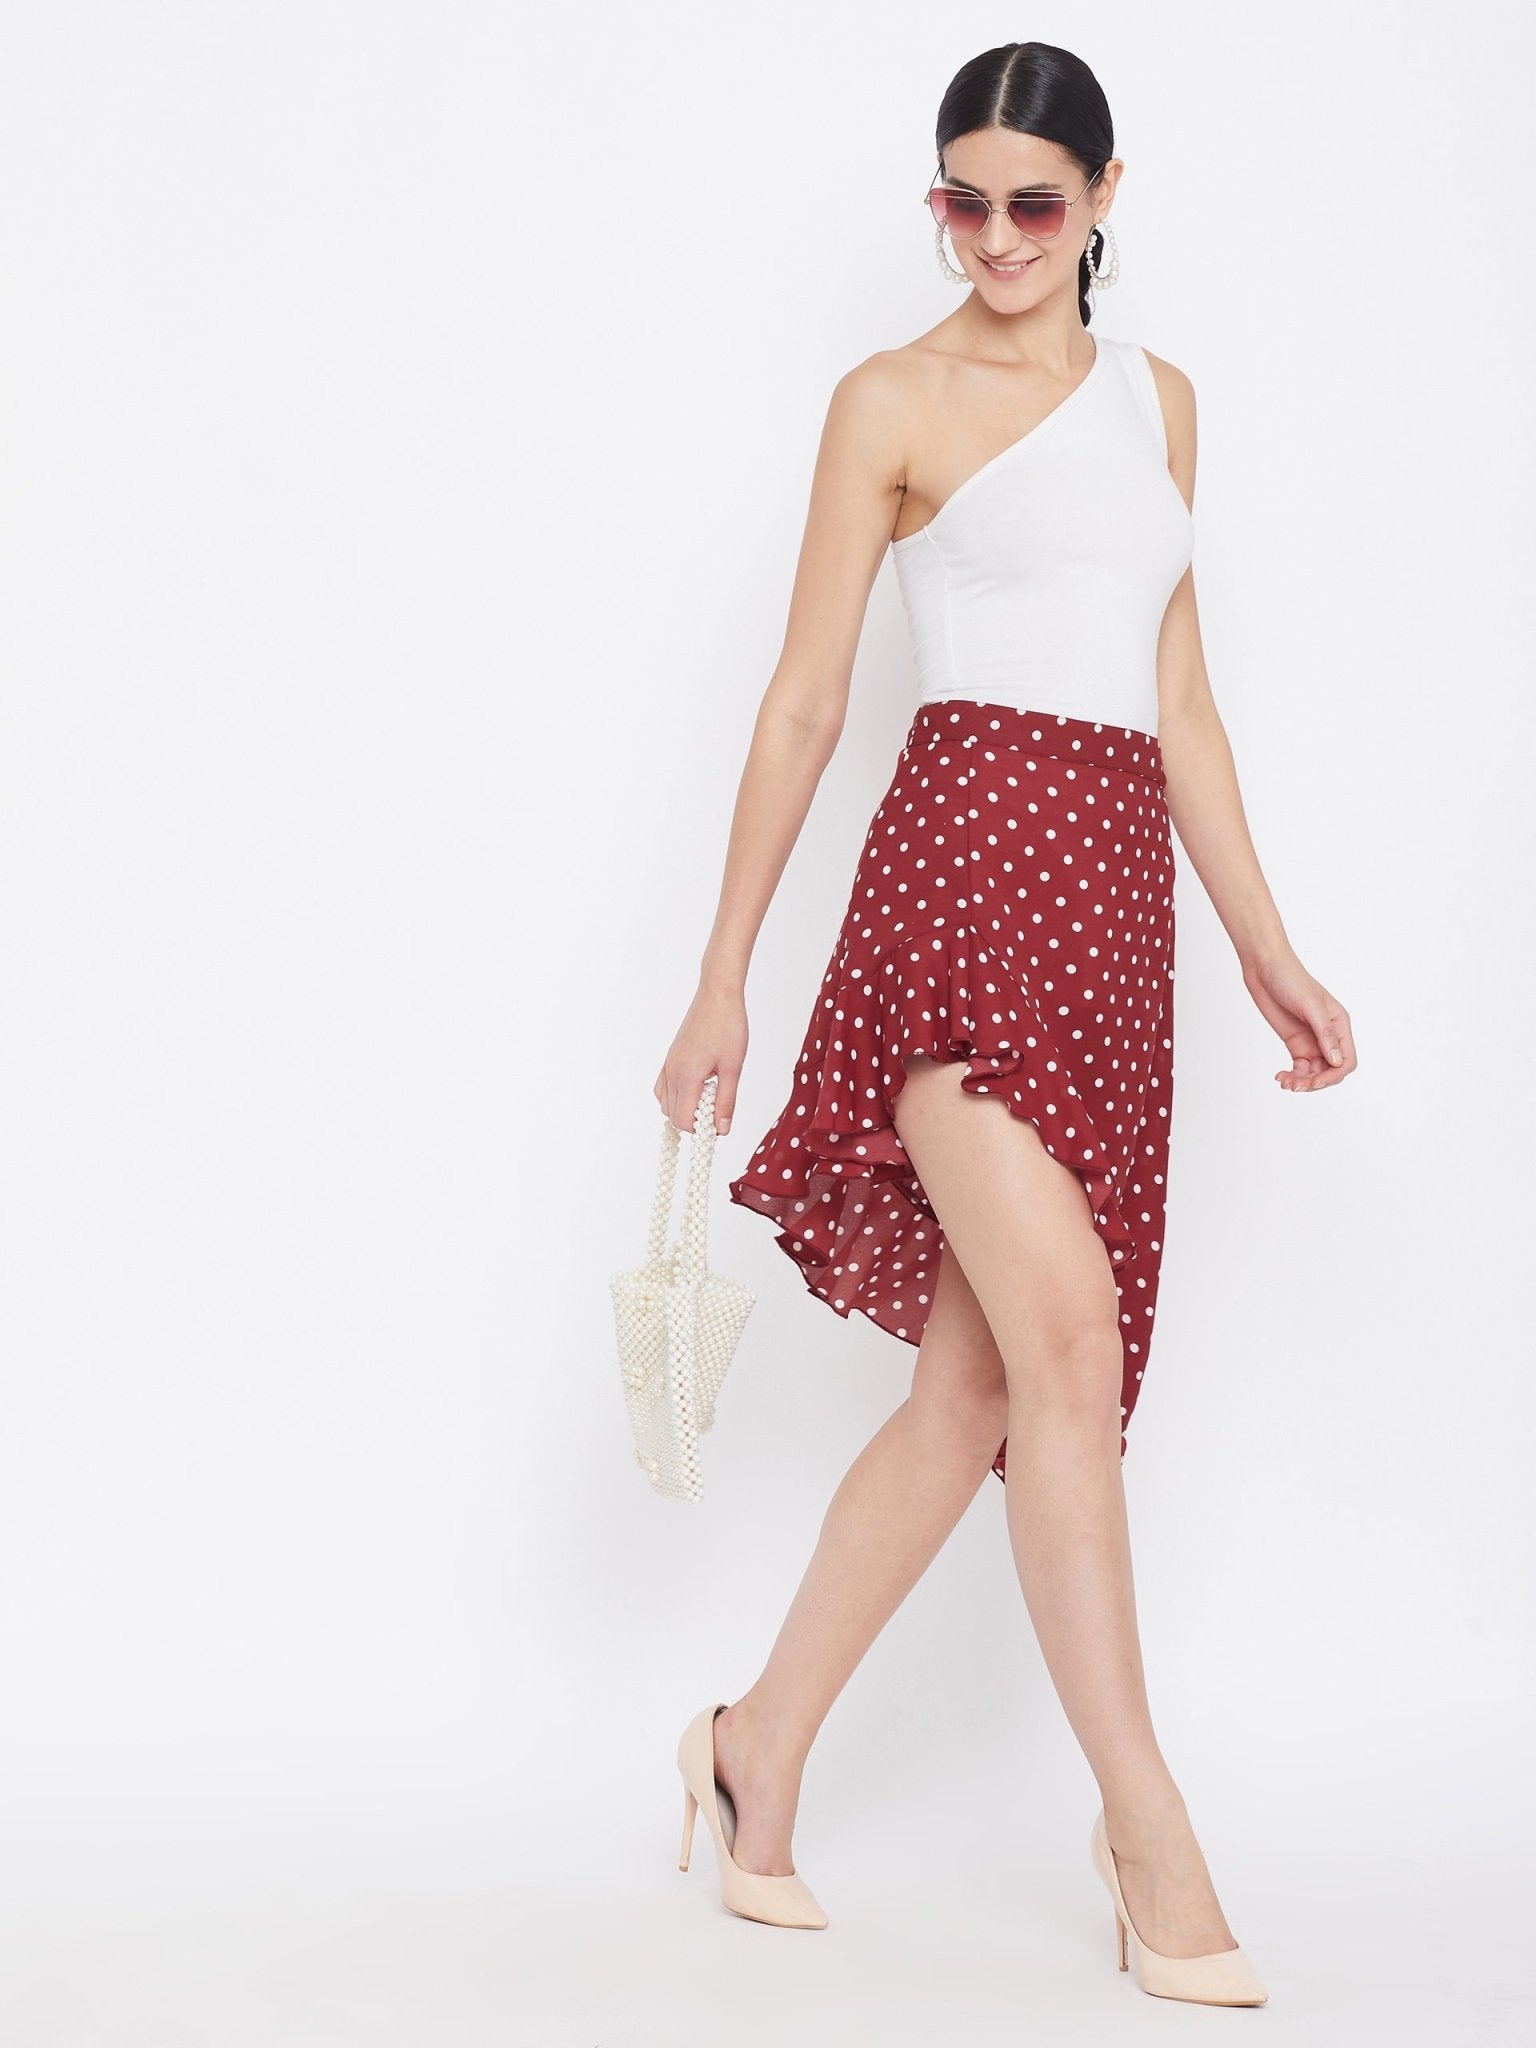 Folk Republic Women Red Polka Dot Asymmetrical Ruffled A-Line Midi Skirt - #folk republic#